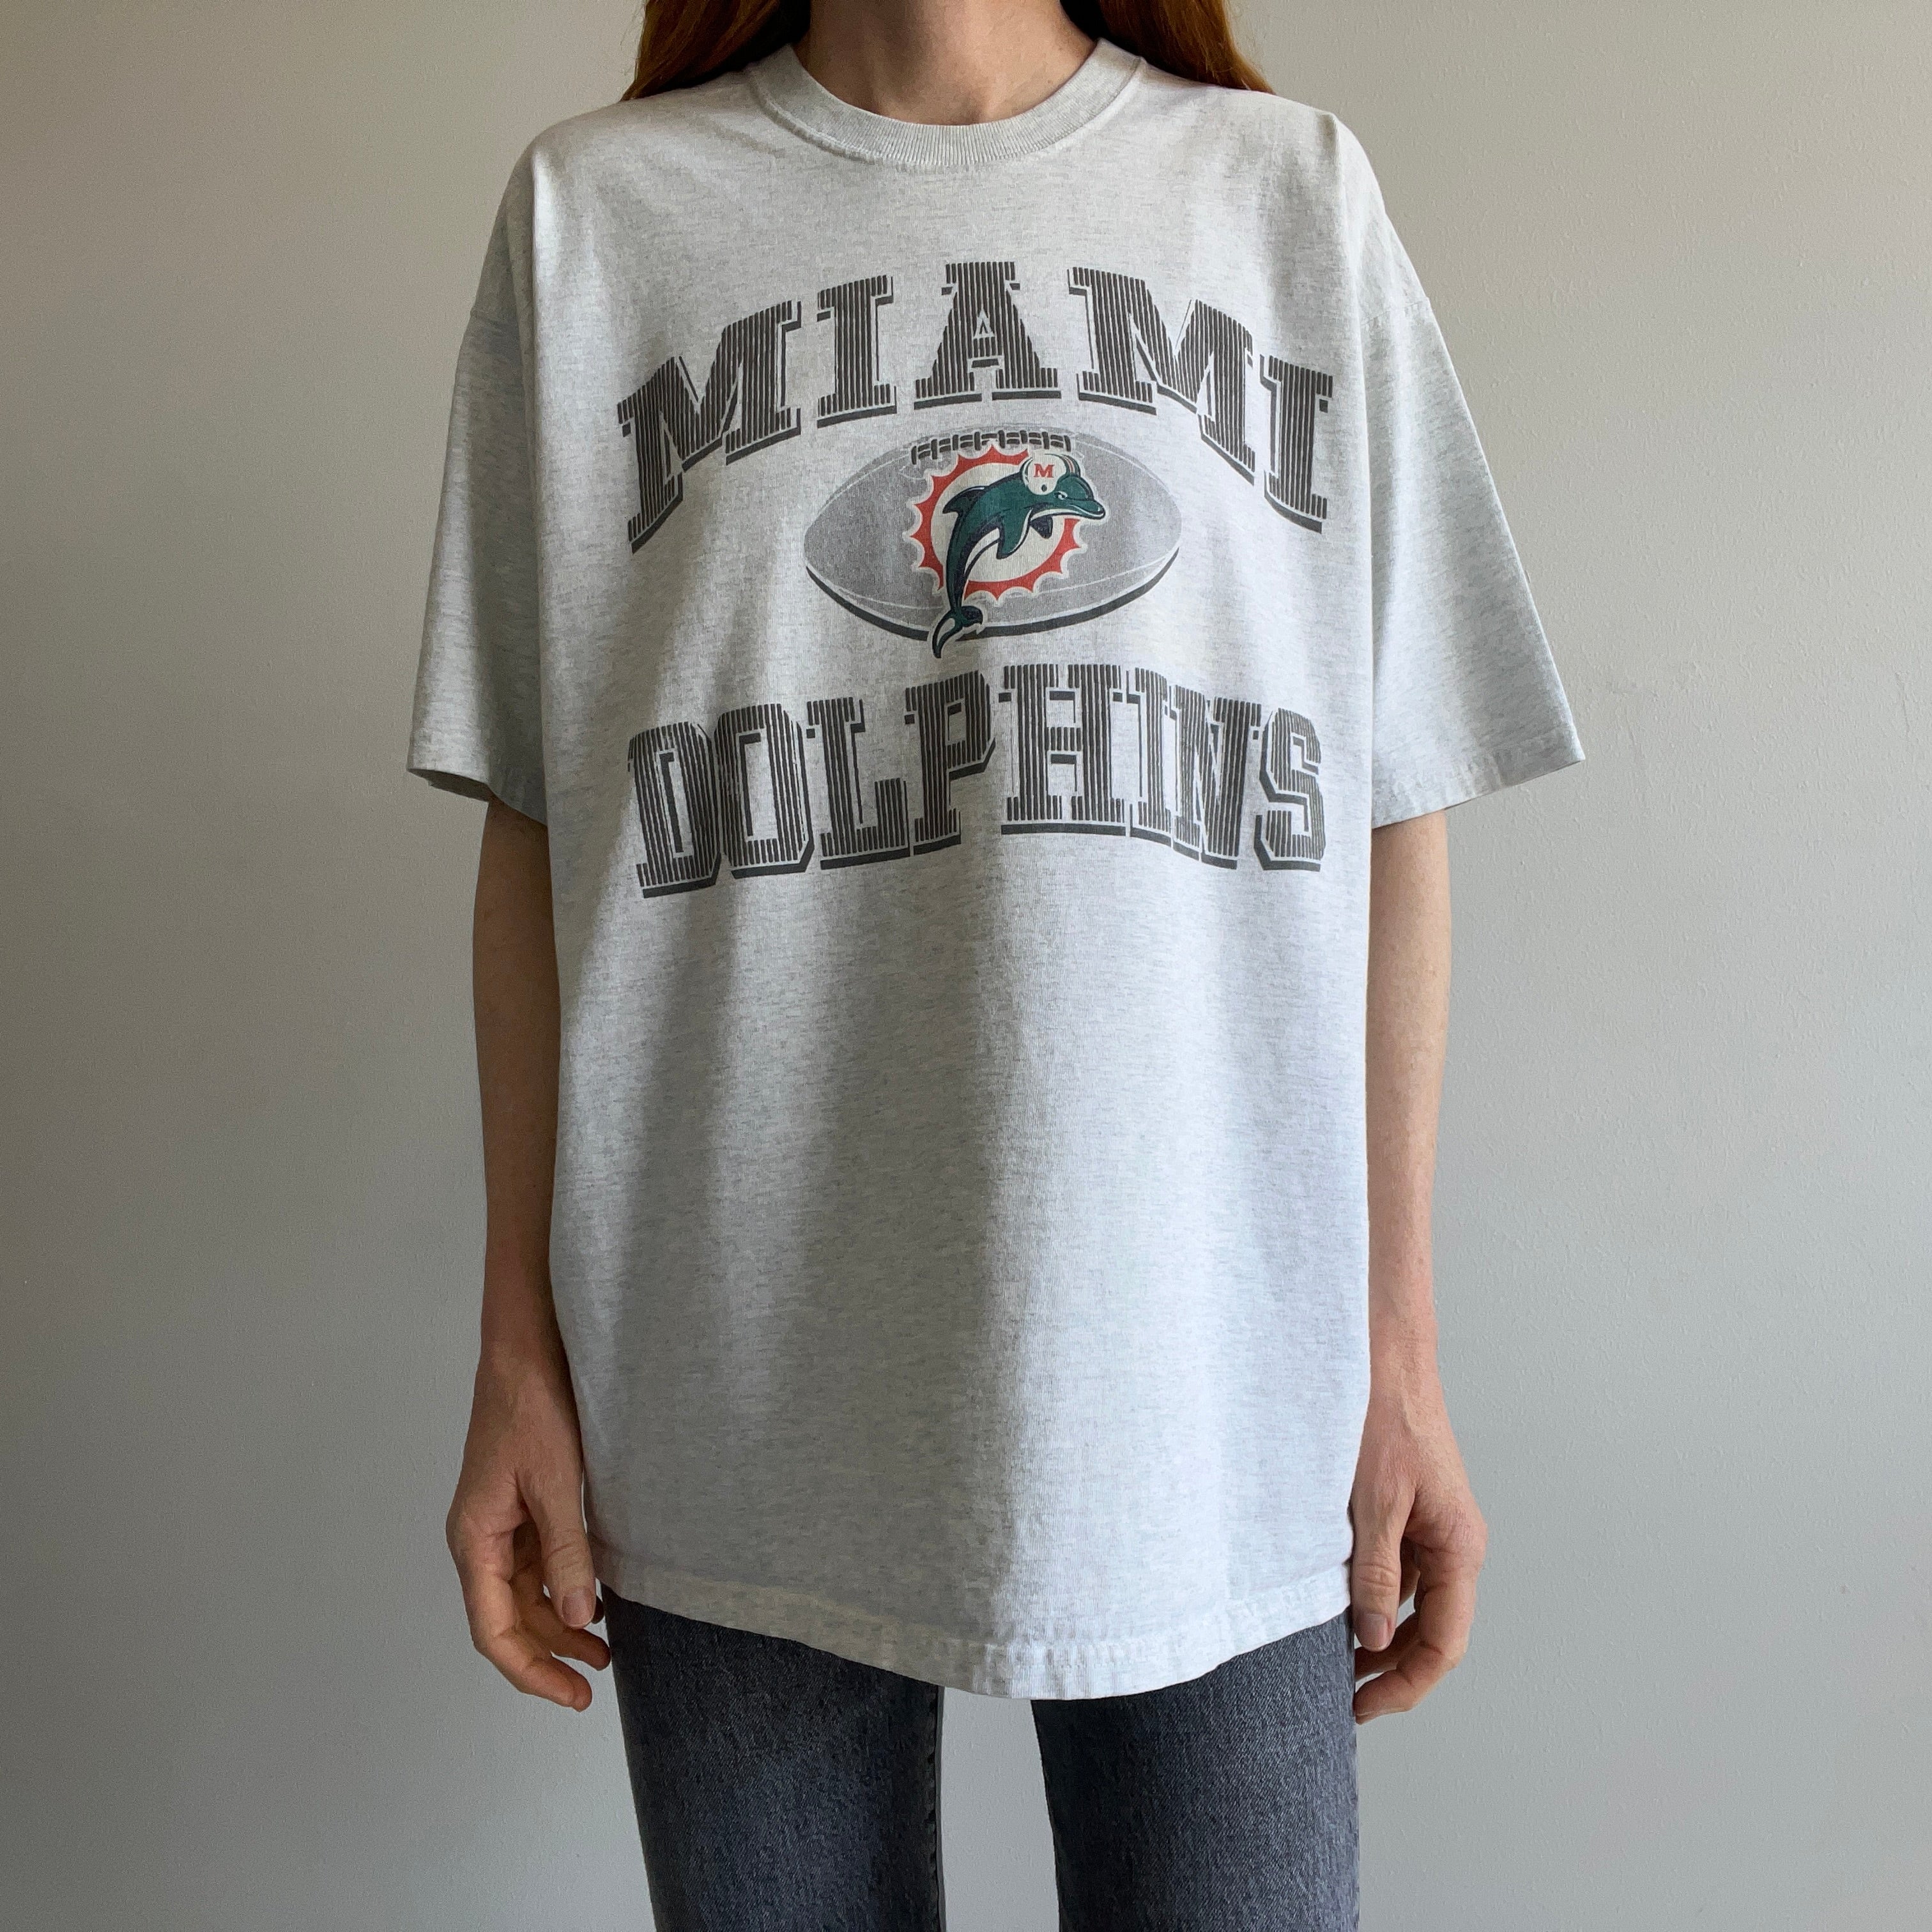 Dolphins-NFL Shop, vintage dolphins t-shirt